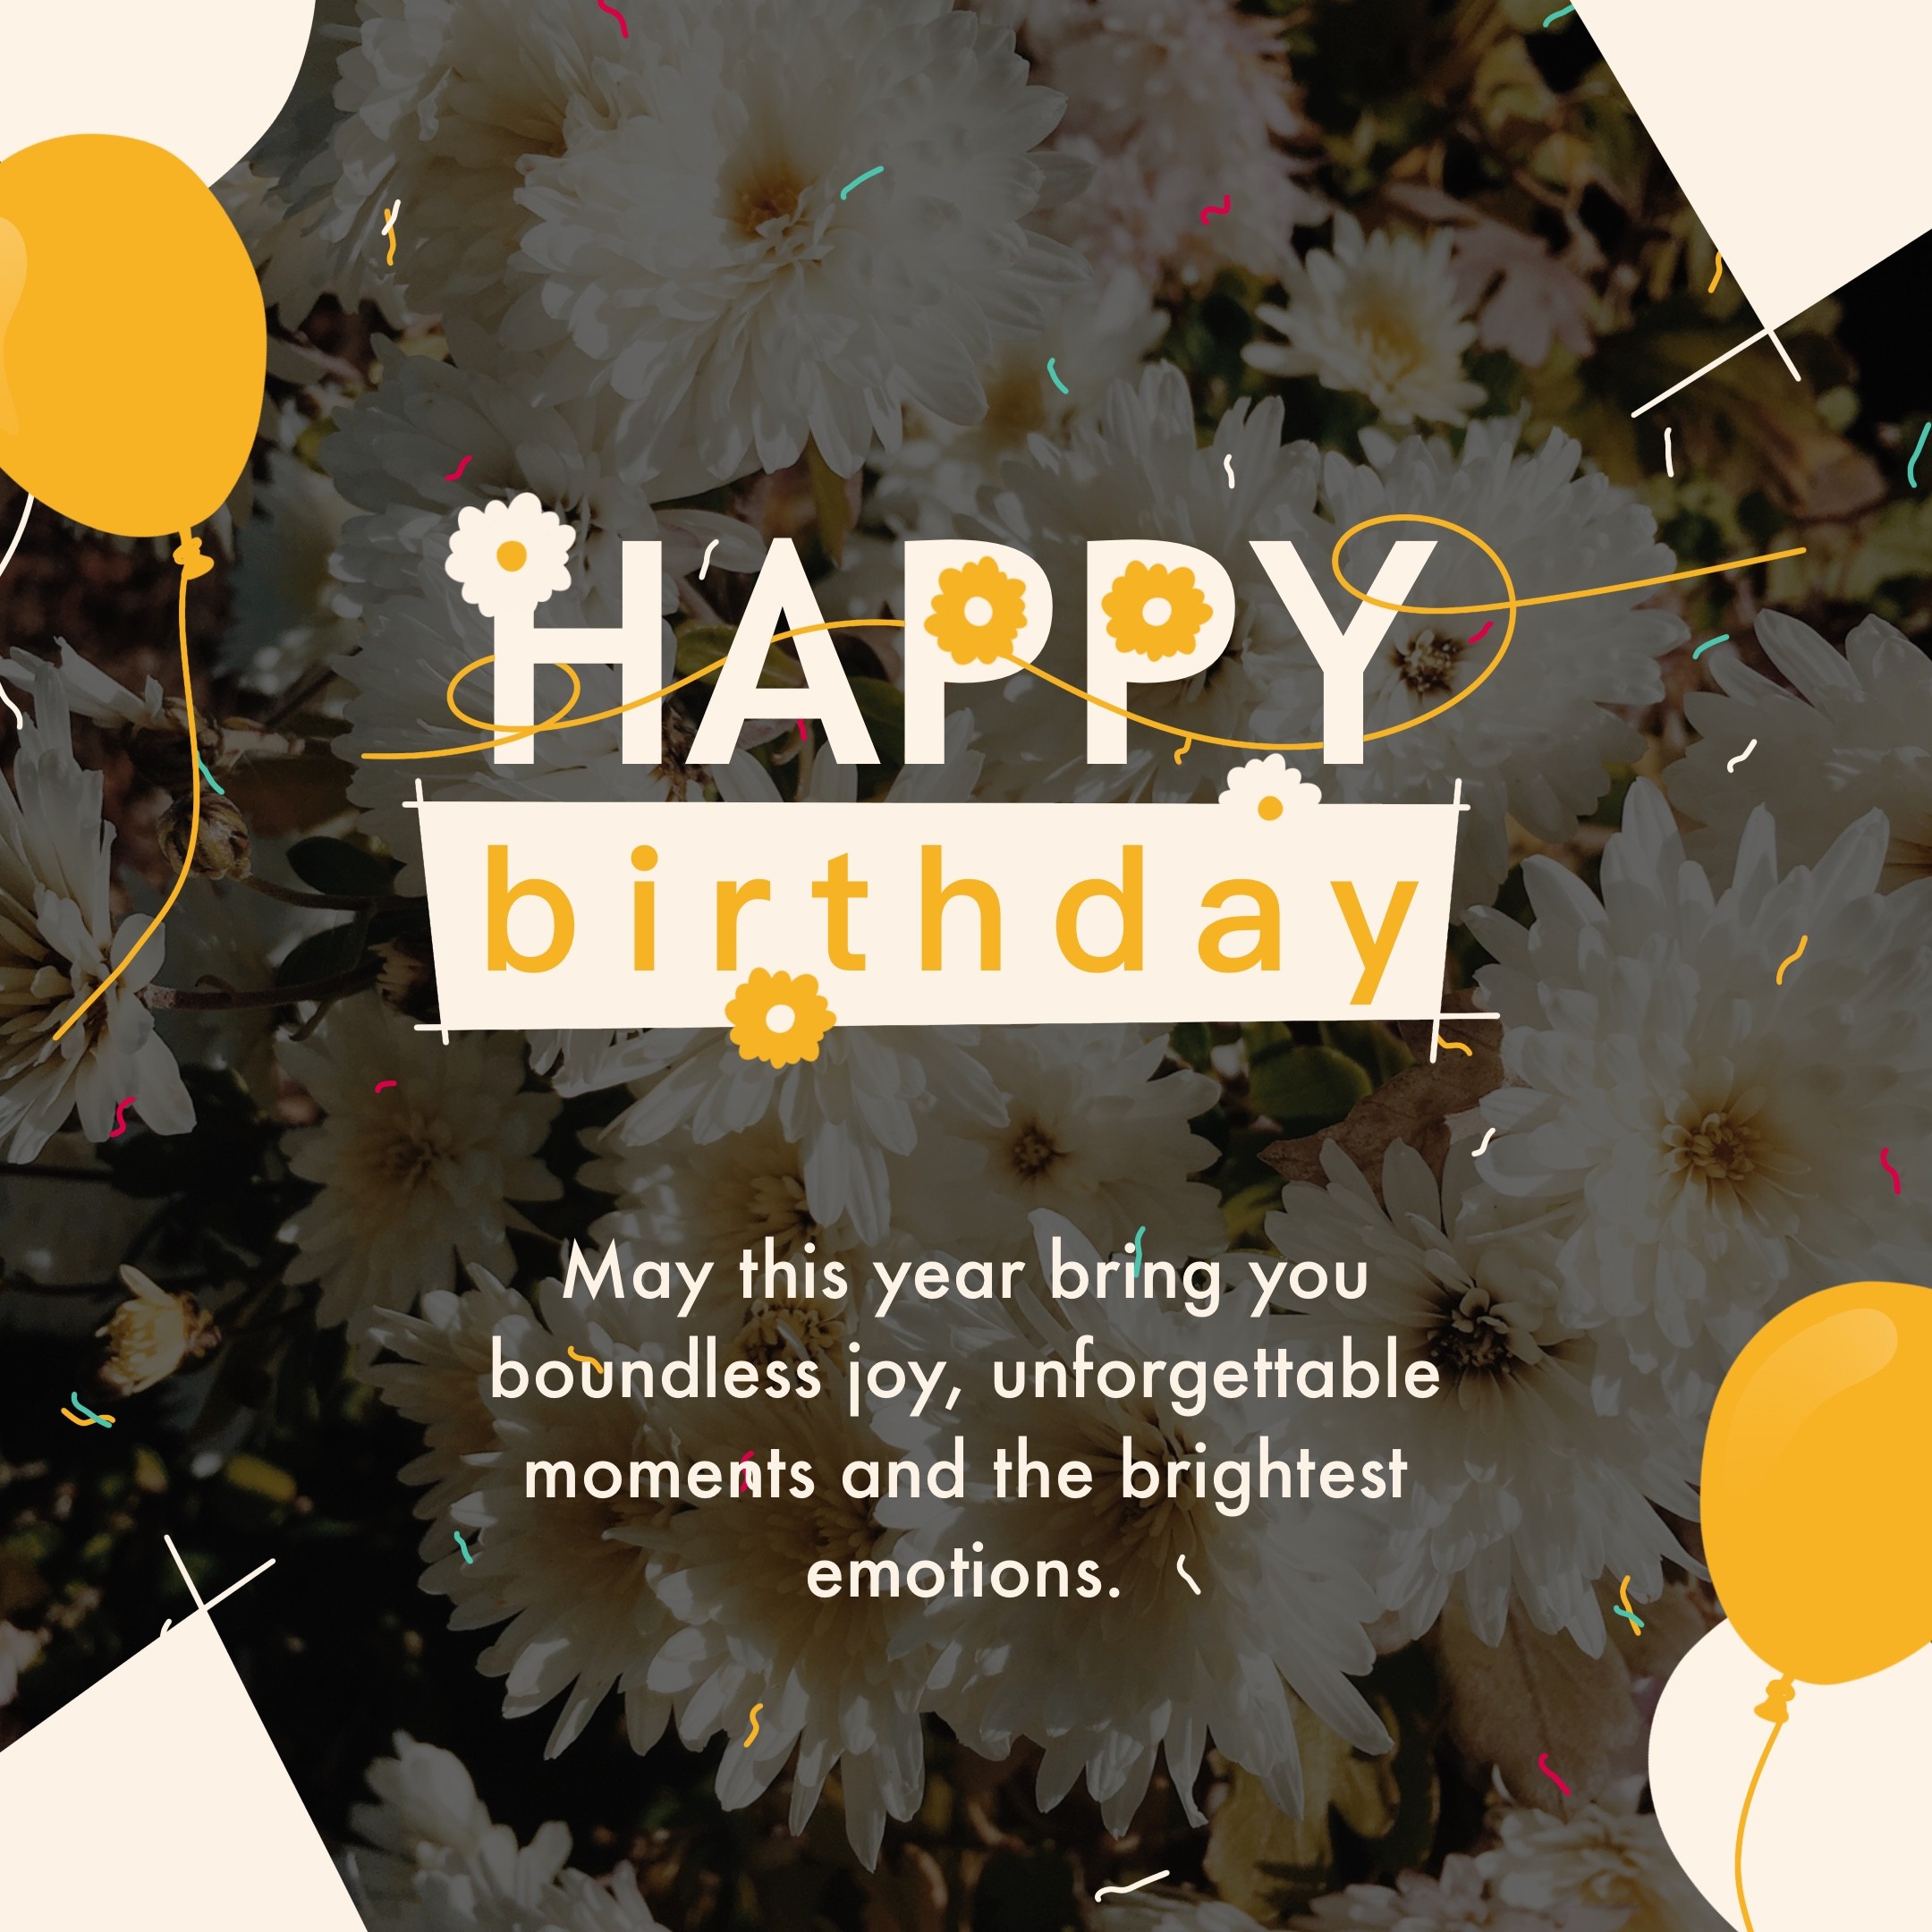 Free Happy Birthday Wishes with Flowers - birthdayimg.com